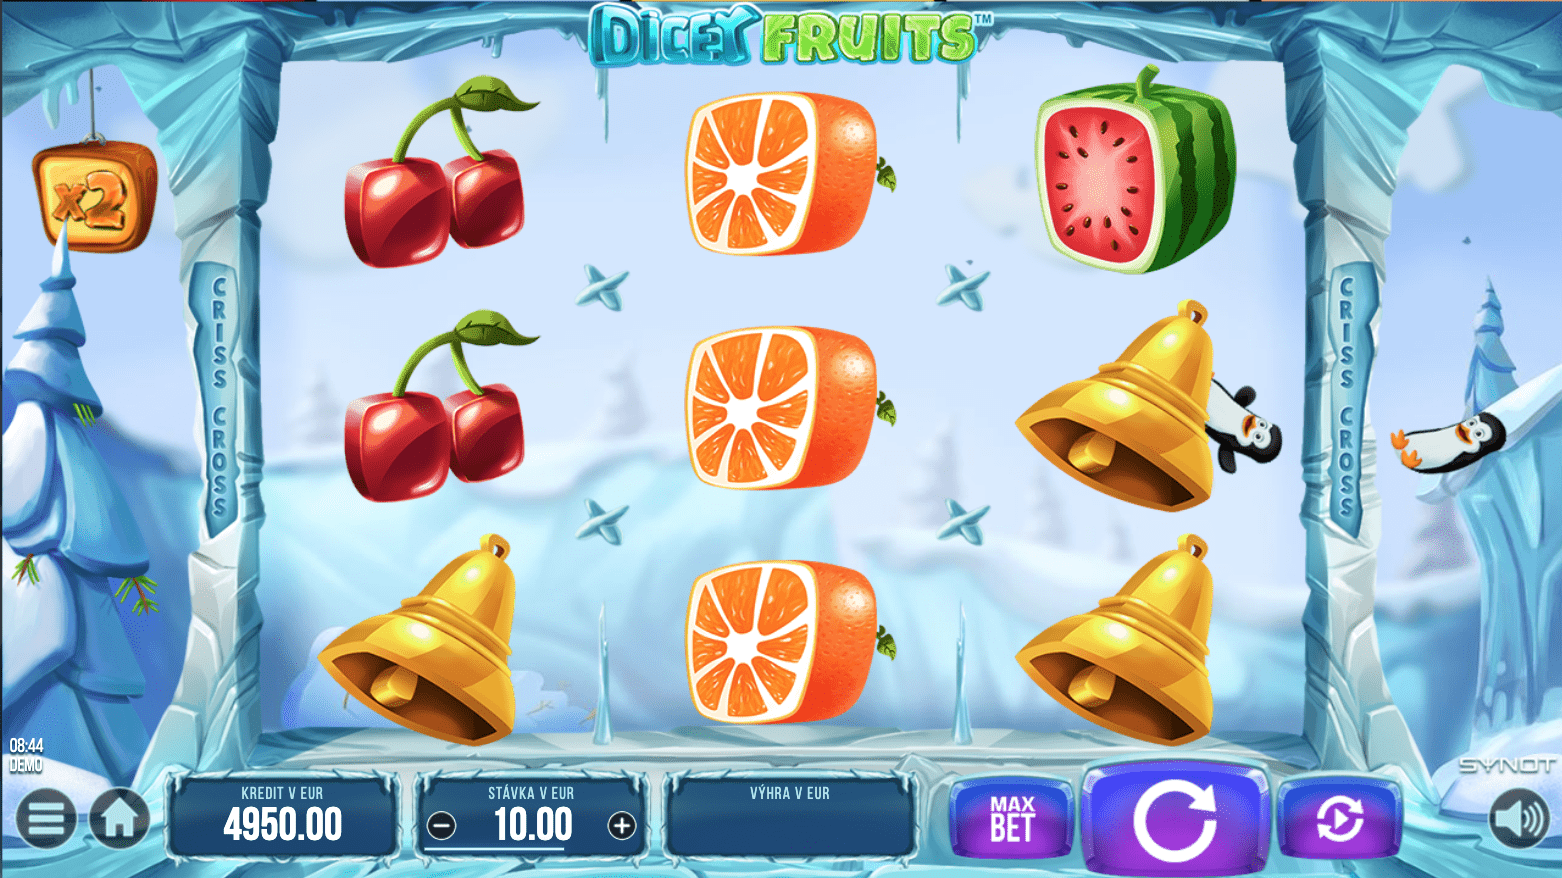 Dicey Fruits oleh SYNOT Games - pratinjau gulungan